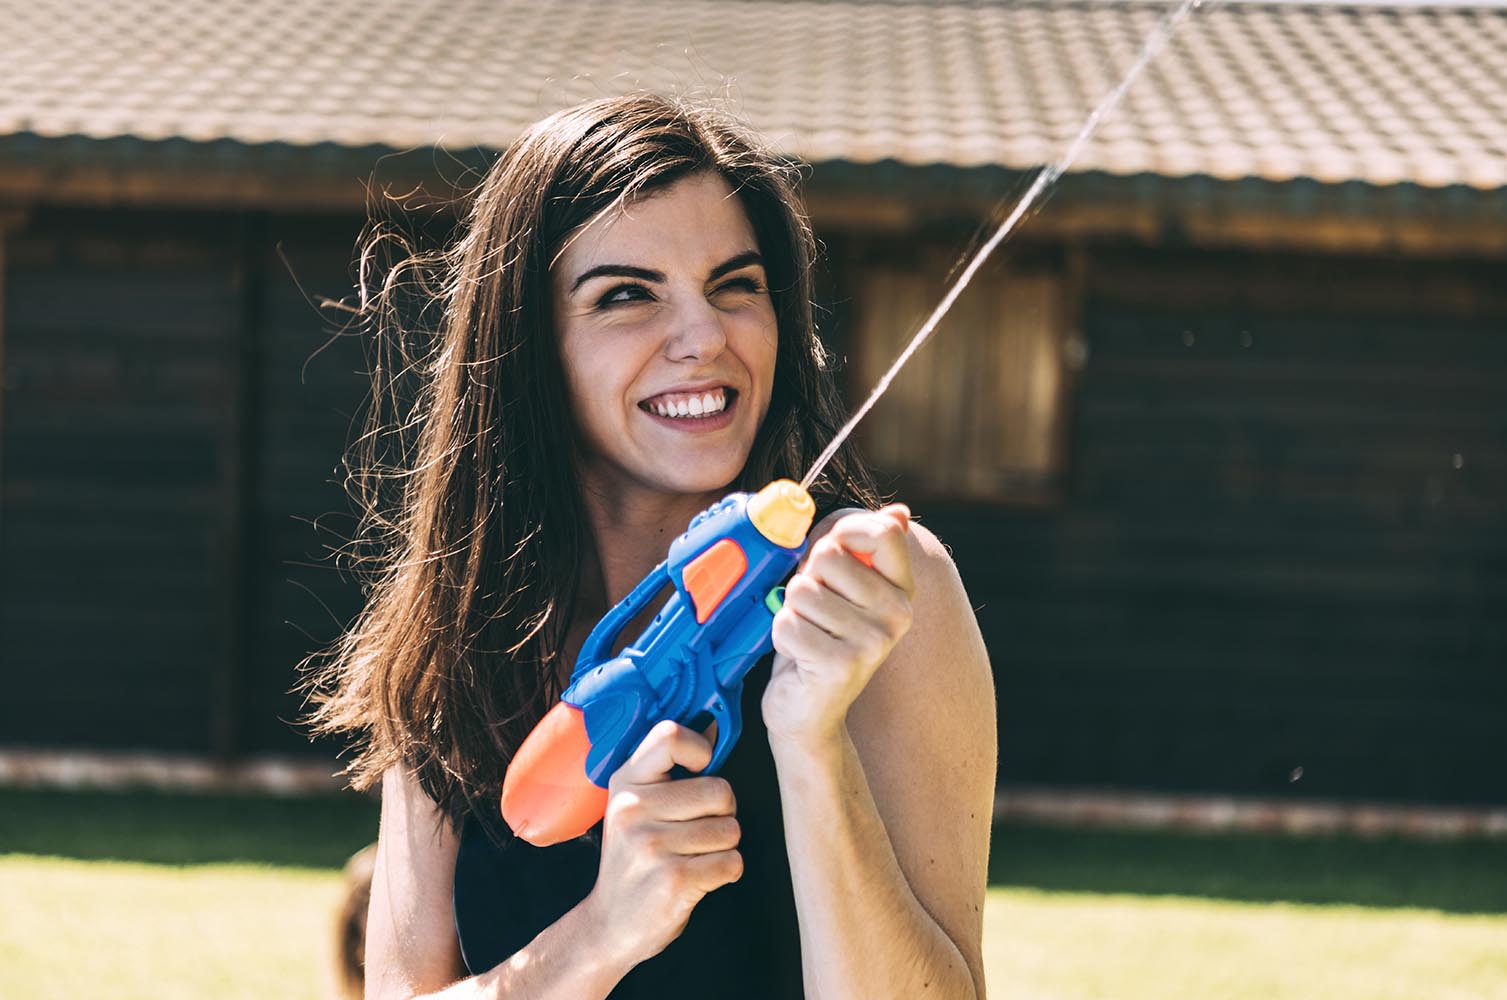 Young woman shooting and splashing with water gun